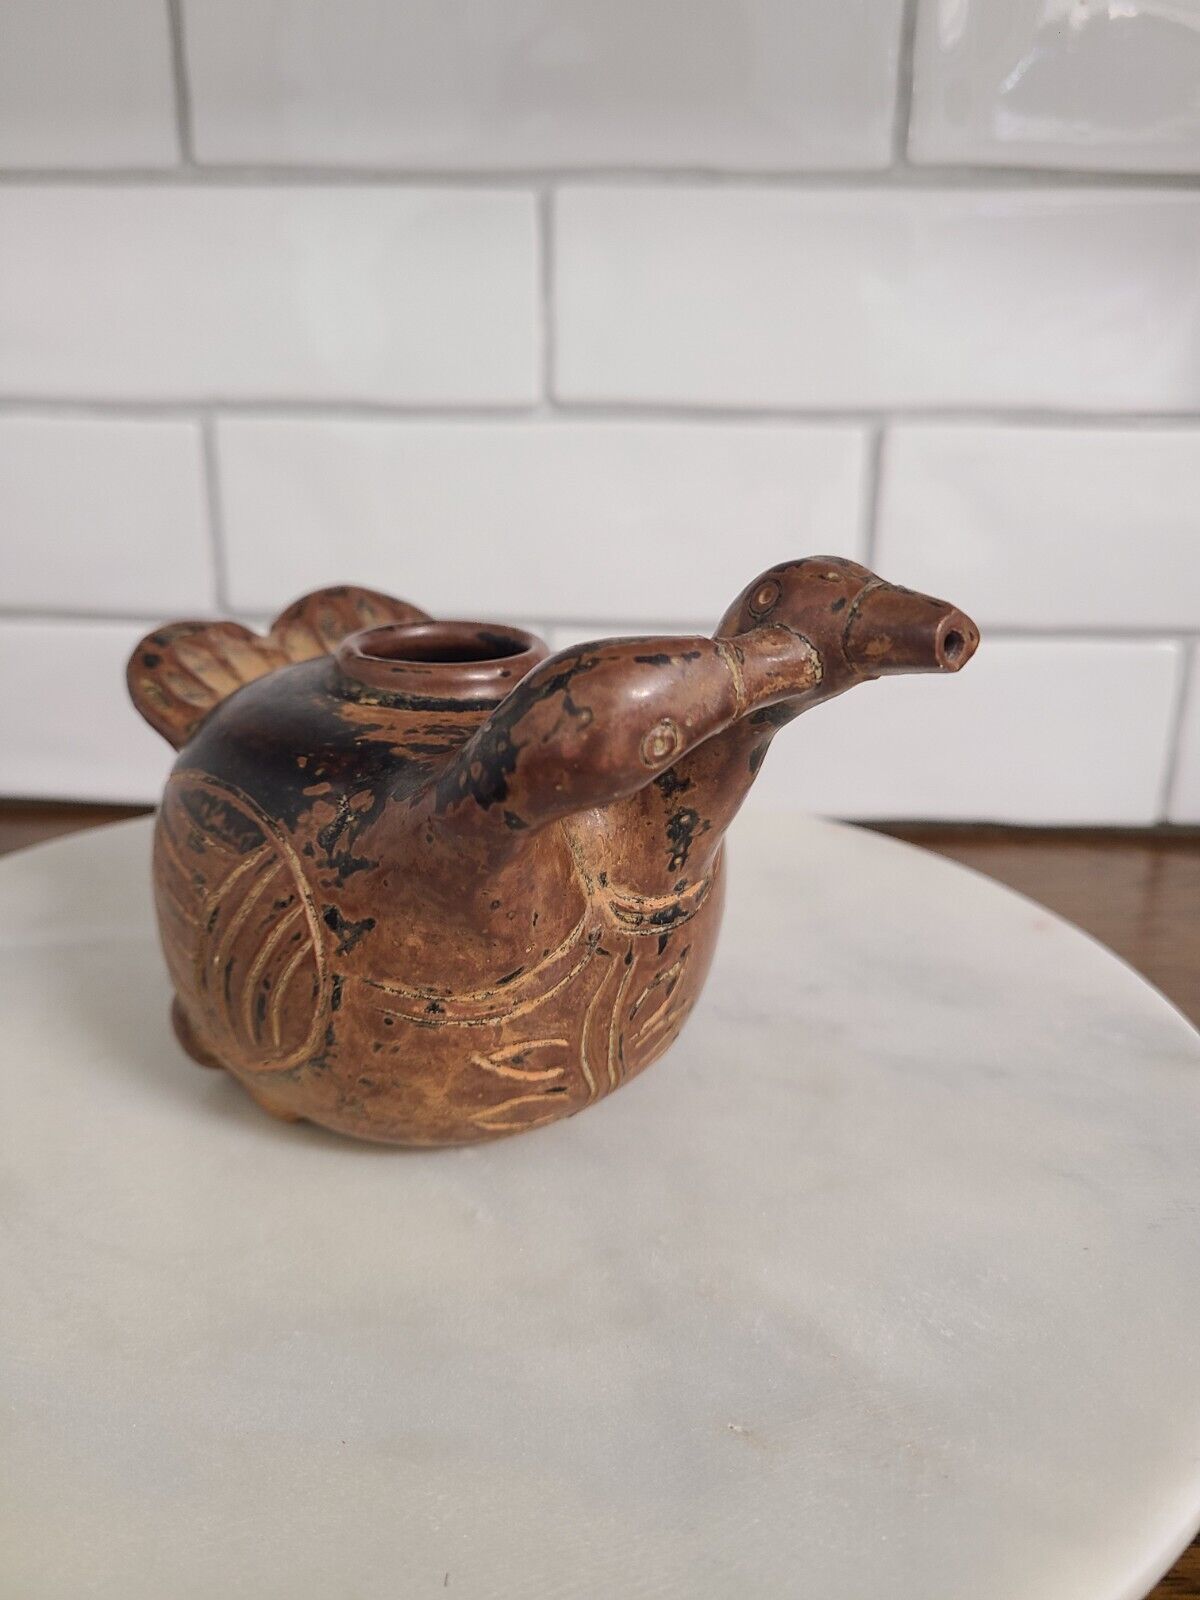 Vintage Primitive Hand Made Kissing Ducks Figurative Terracotta Vessel 6”L x 4”H